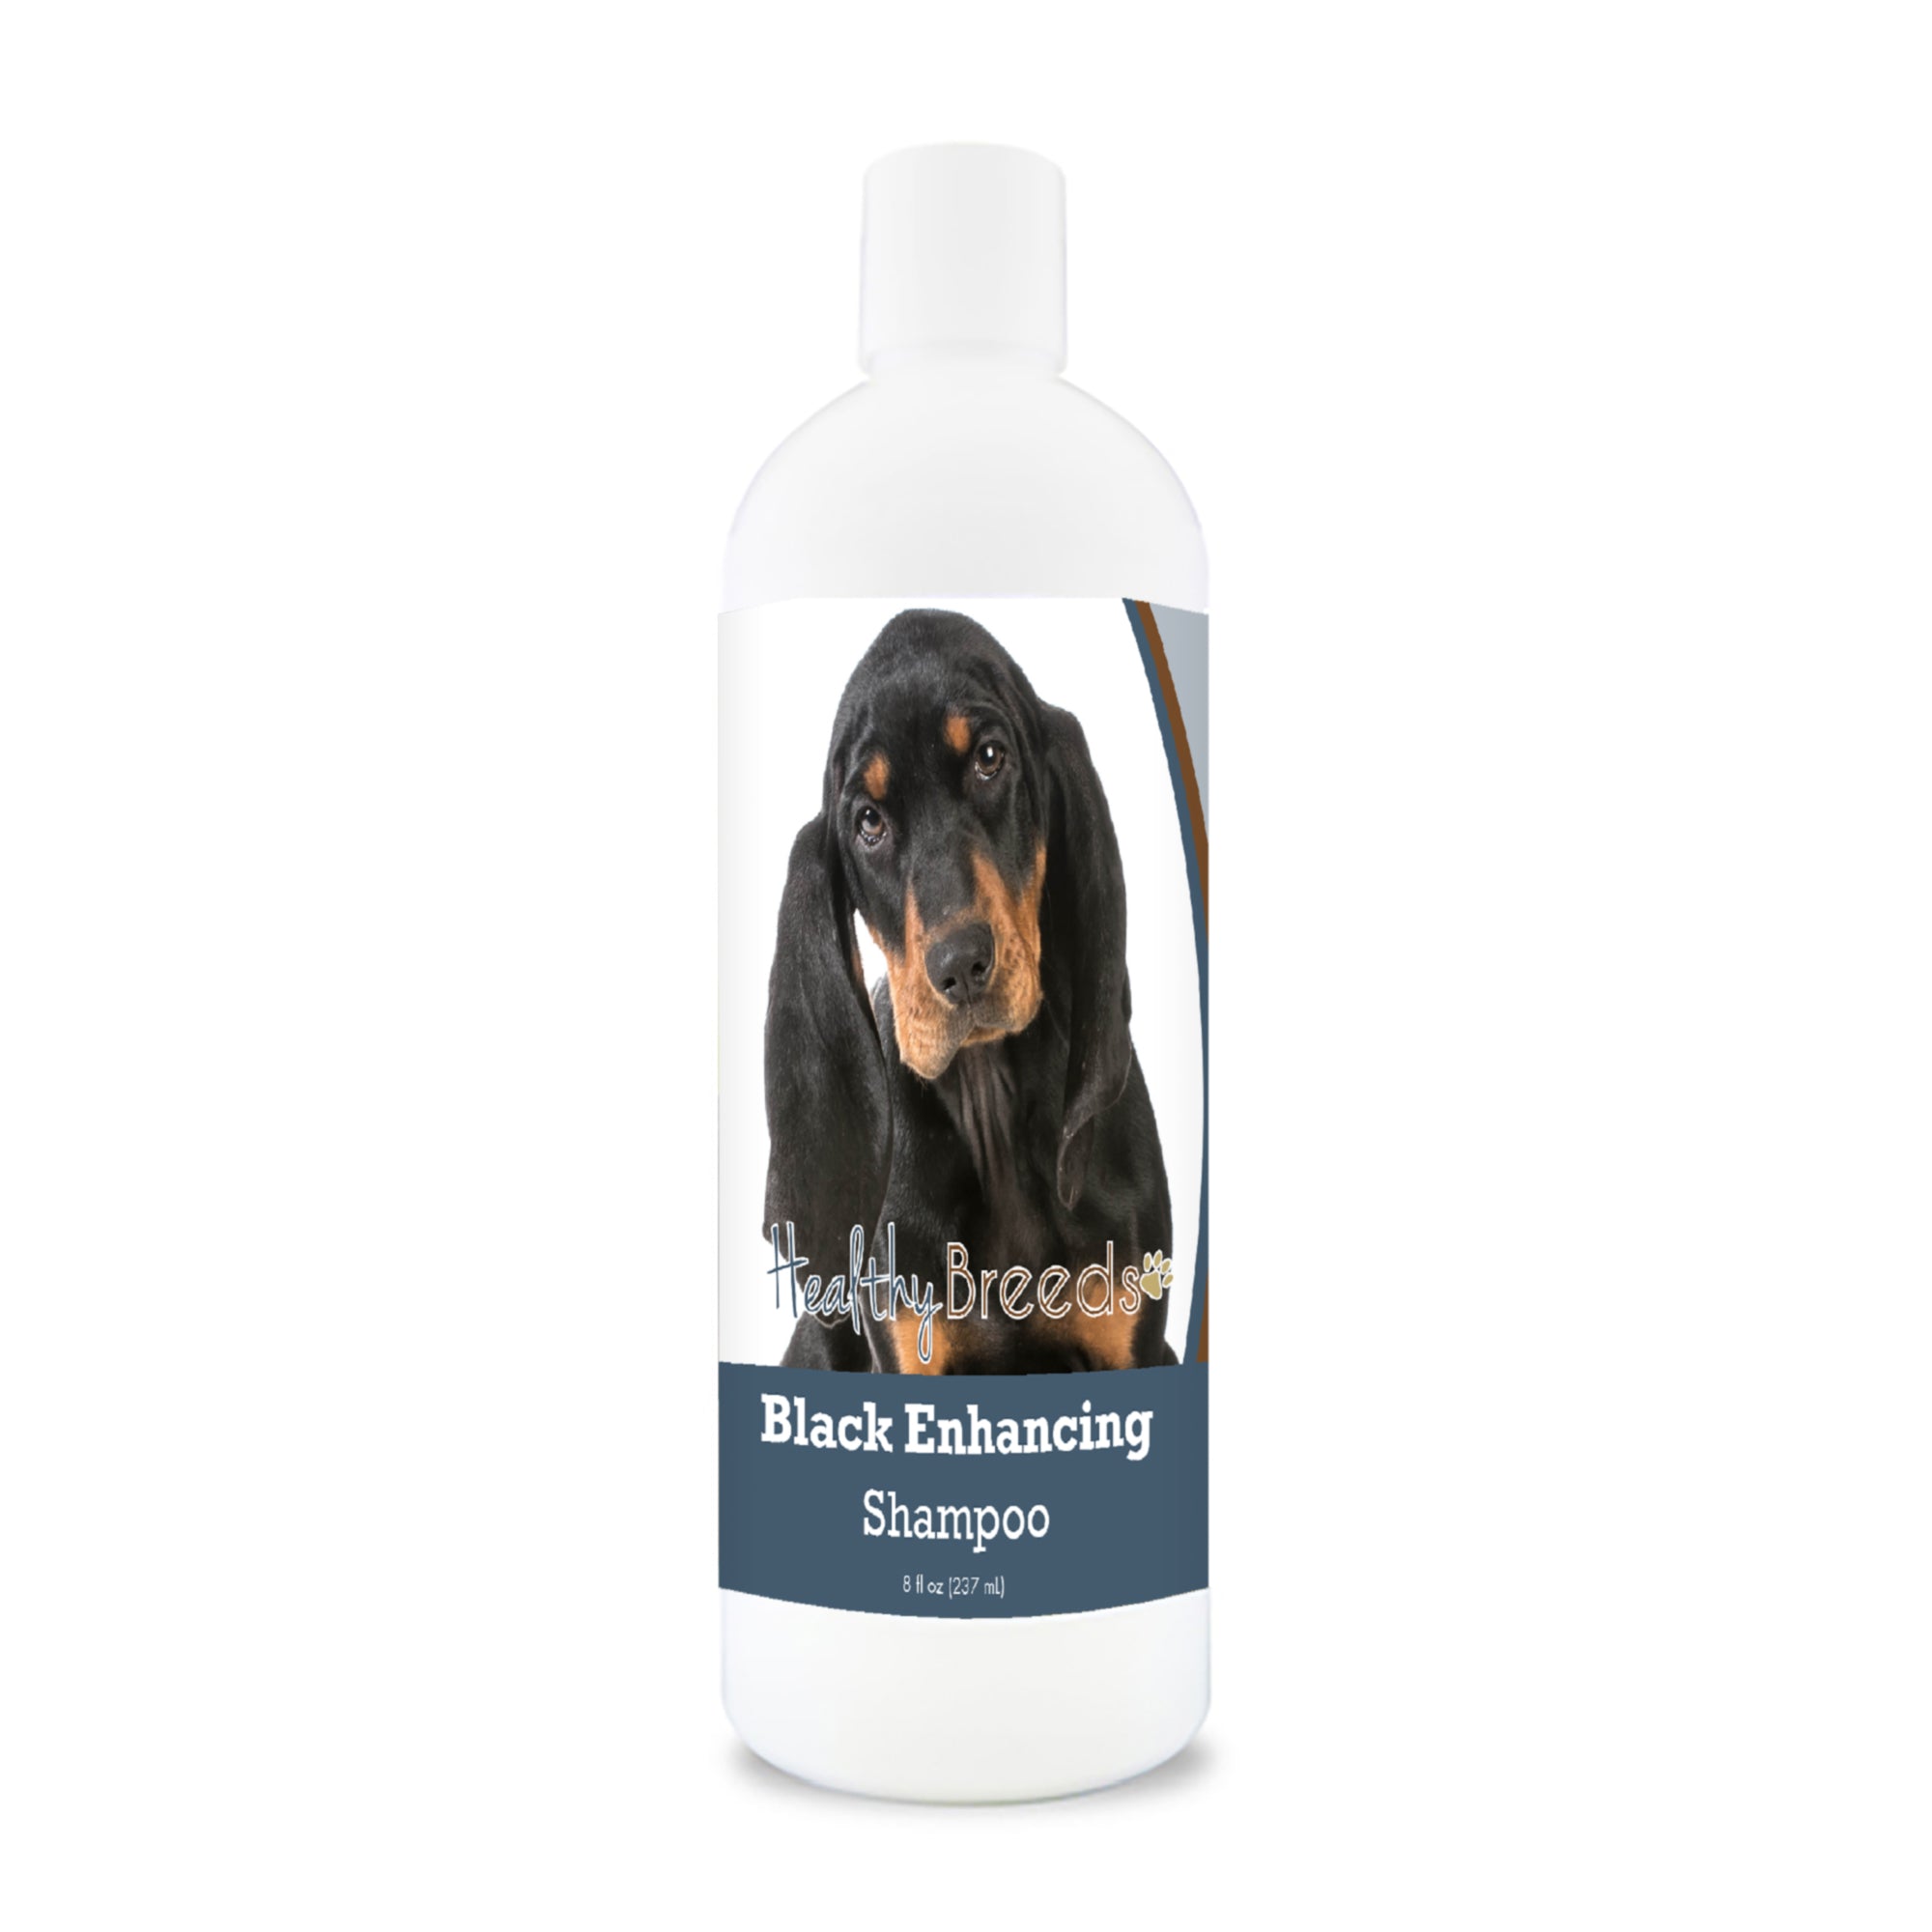 Black and Tan Coonhound Black Enhancing Shampoo 8 oz